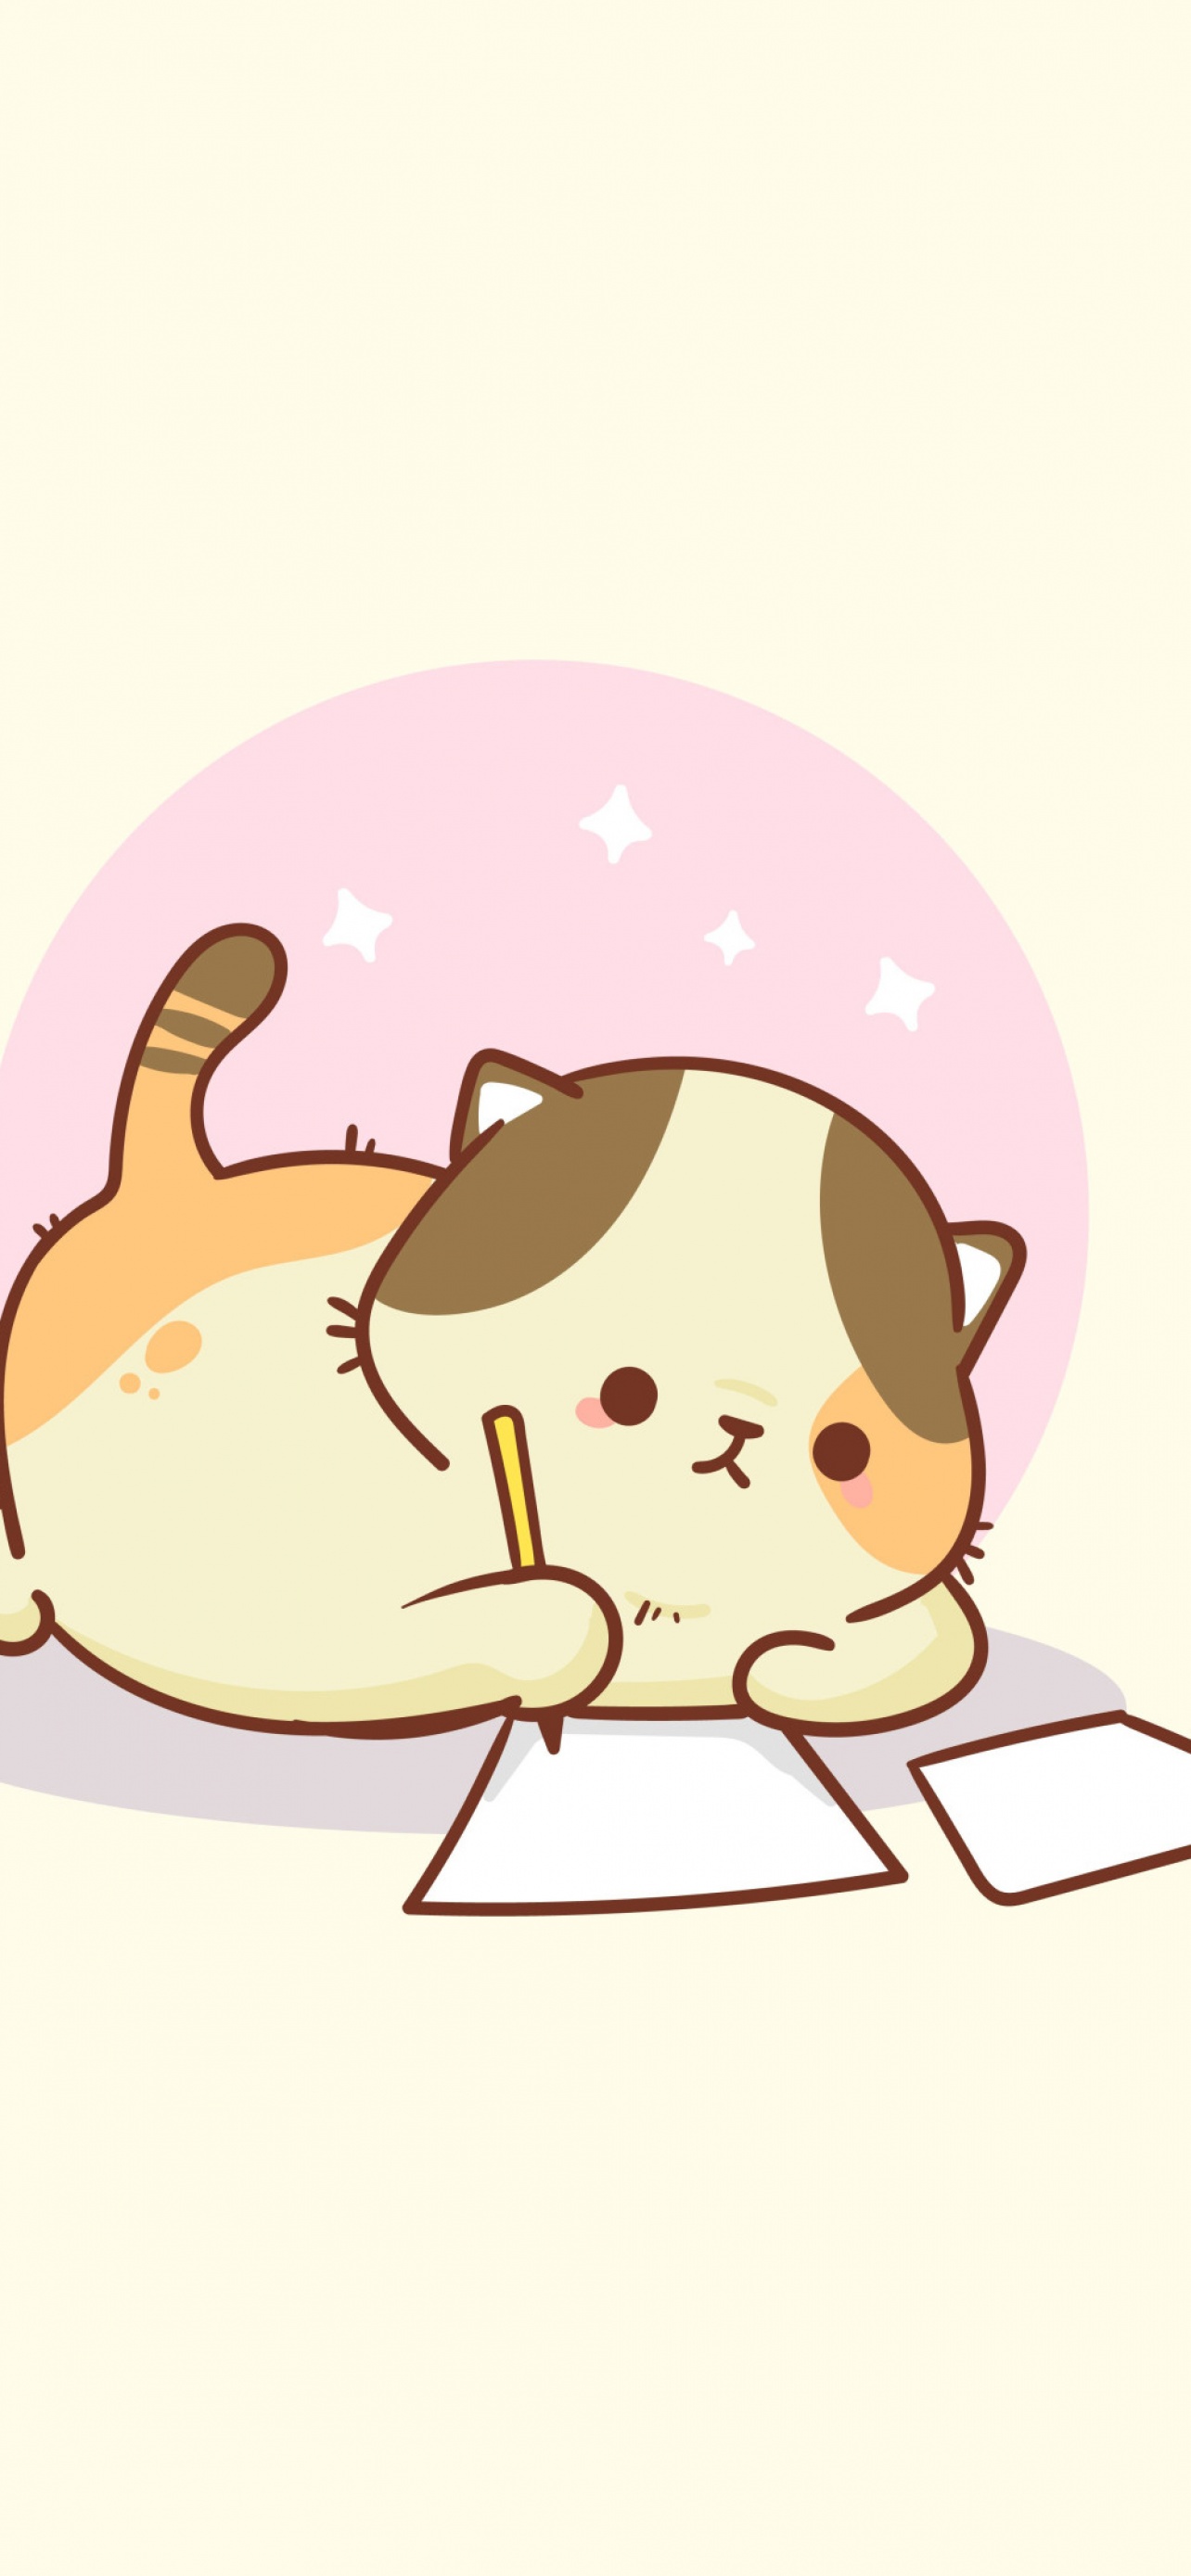 Premium Photo  Cute anime cat character digital illustration painting